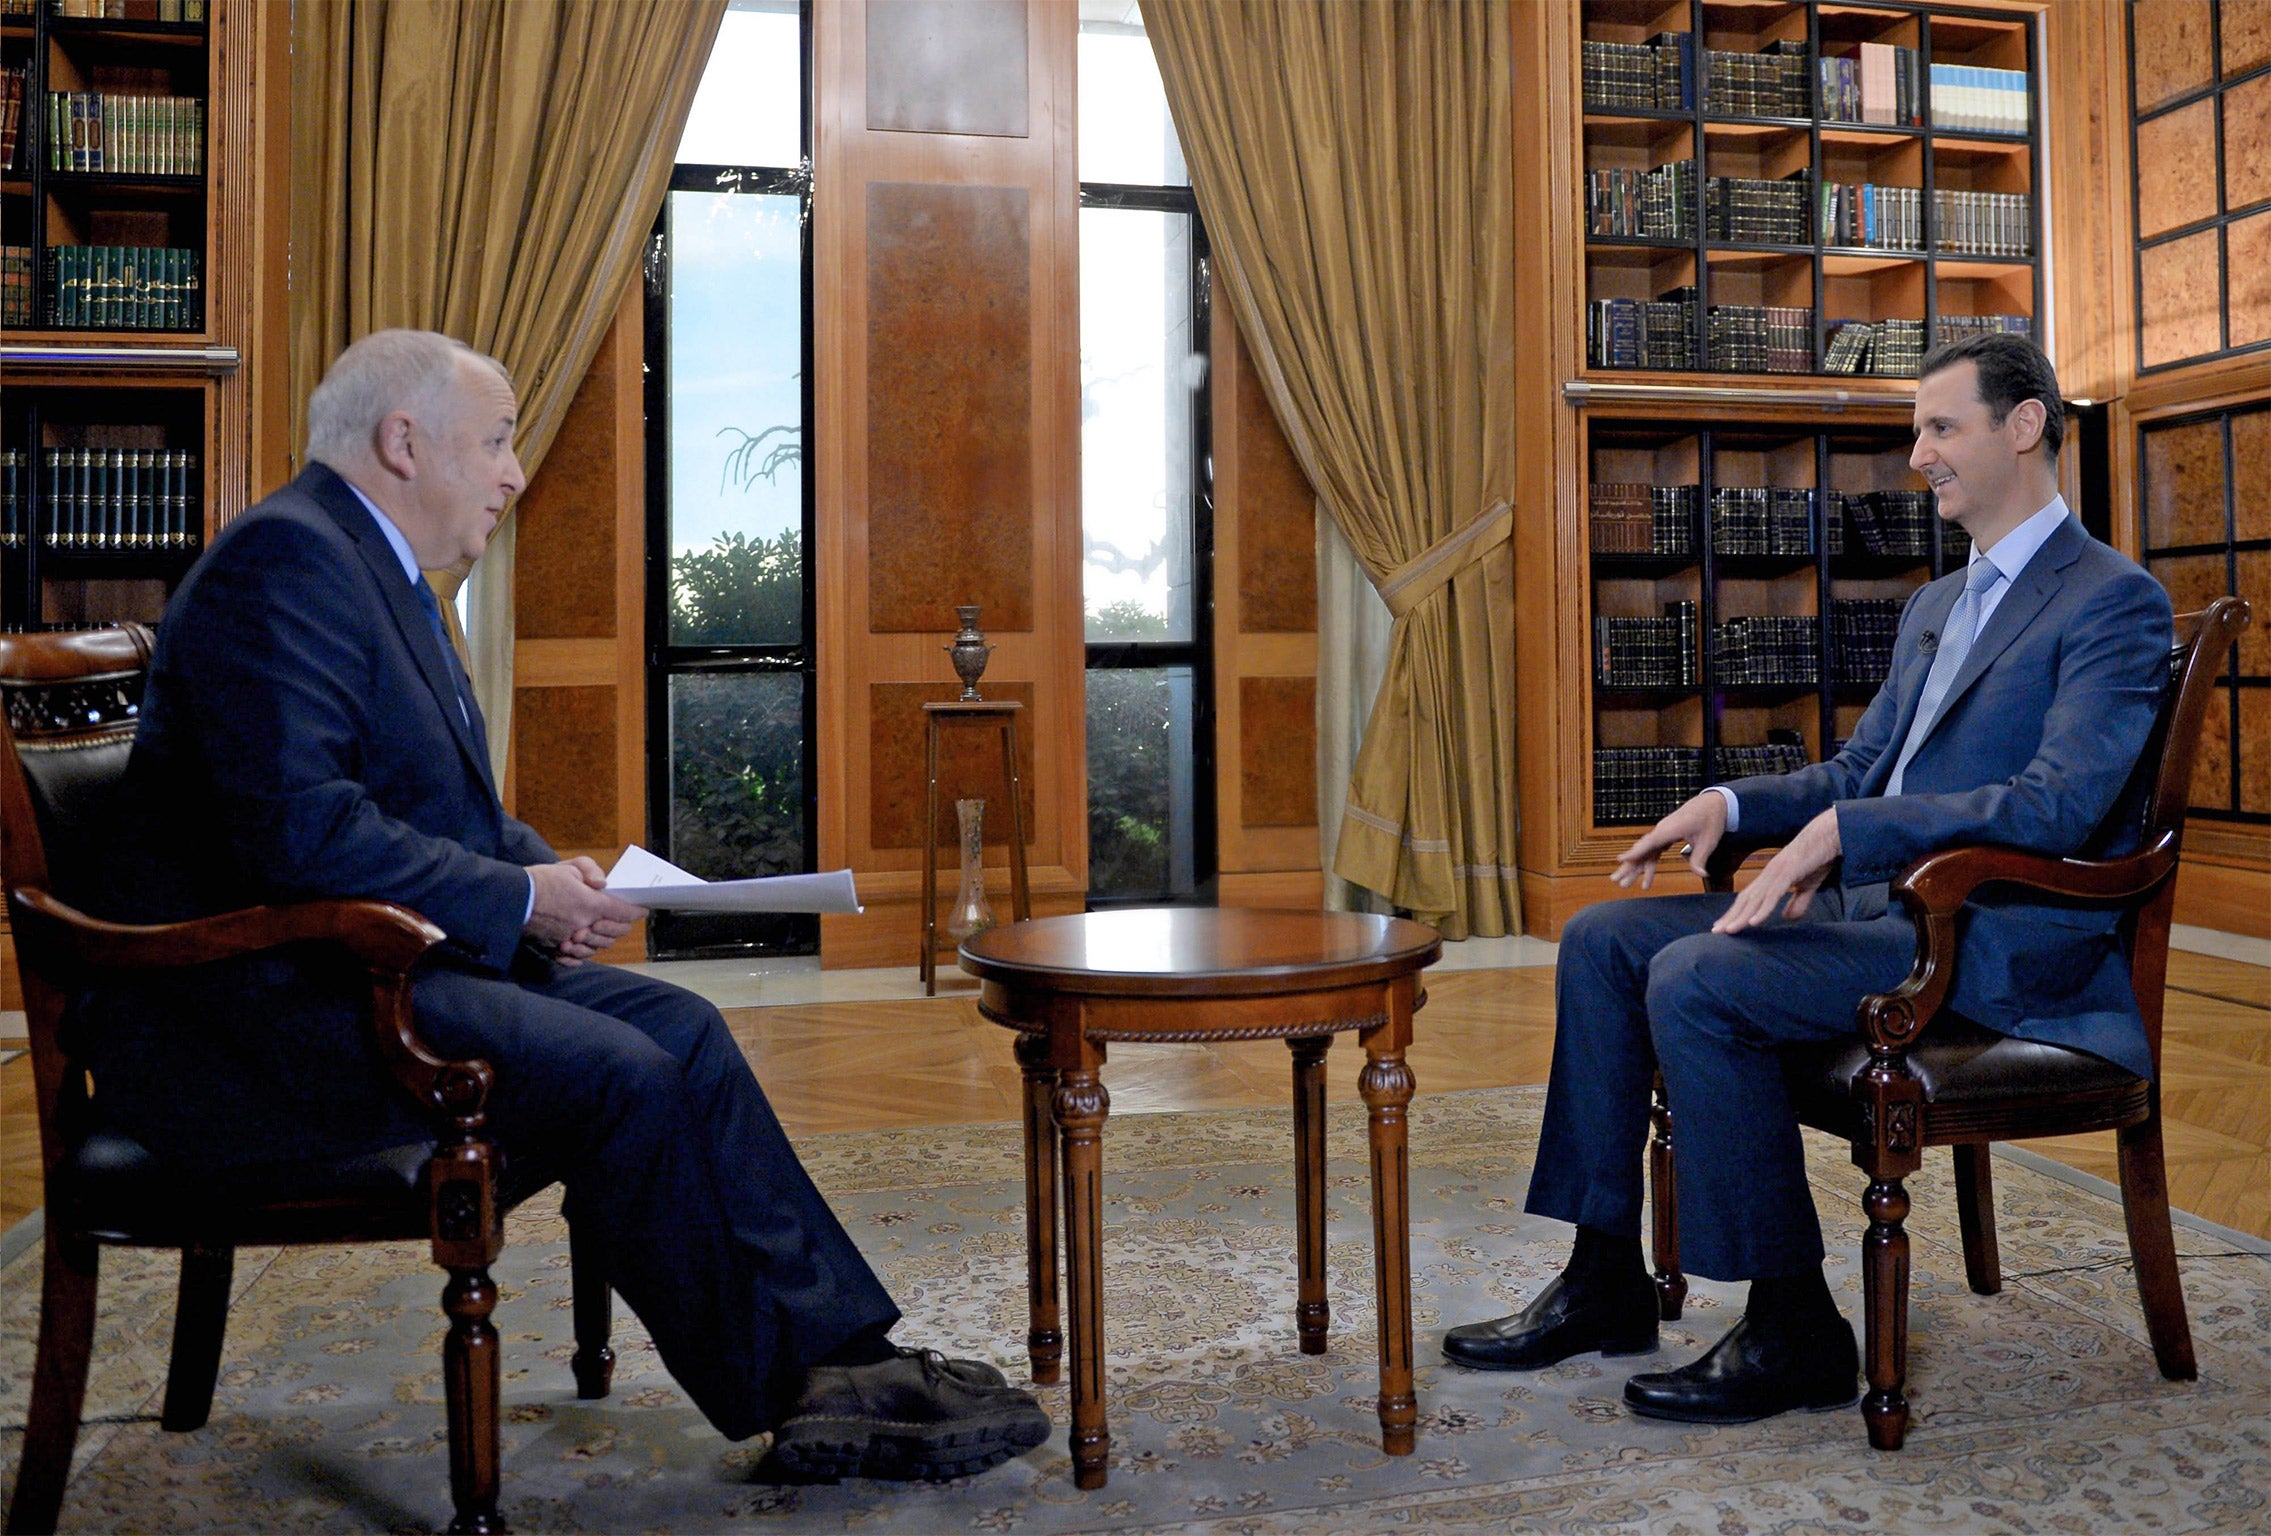 BBC's Middle East Editor Jeremy Bowen interviewing President Bashar al-Assad in Damascus